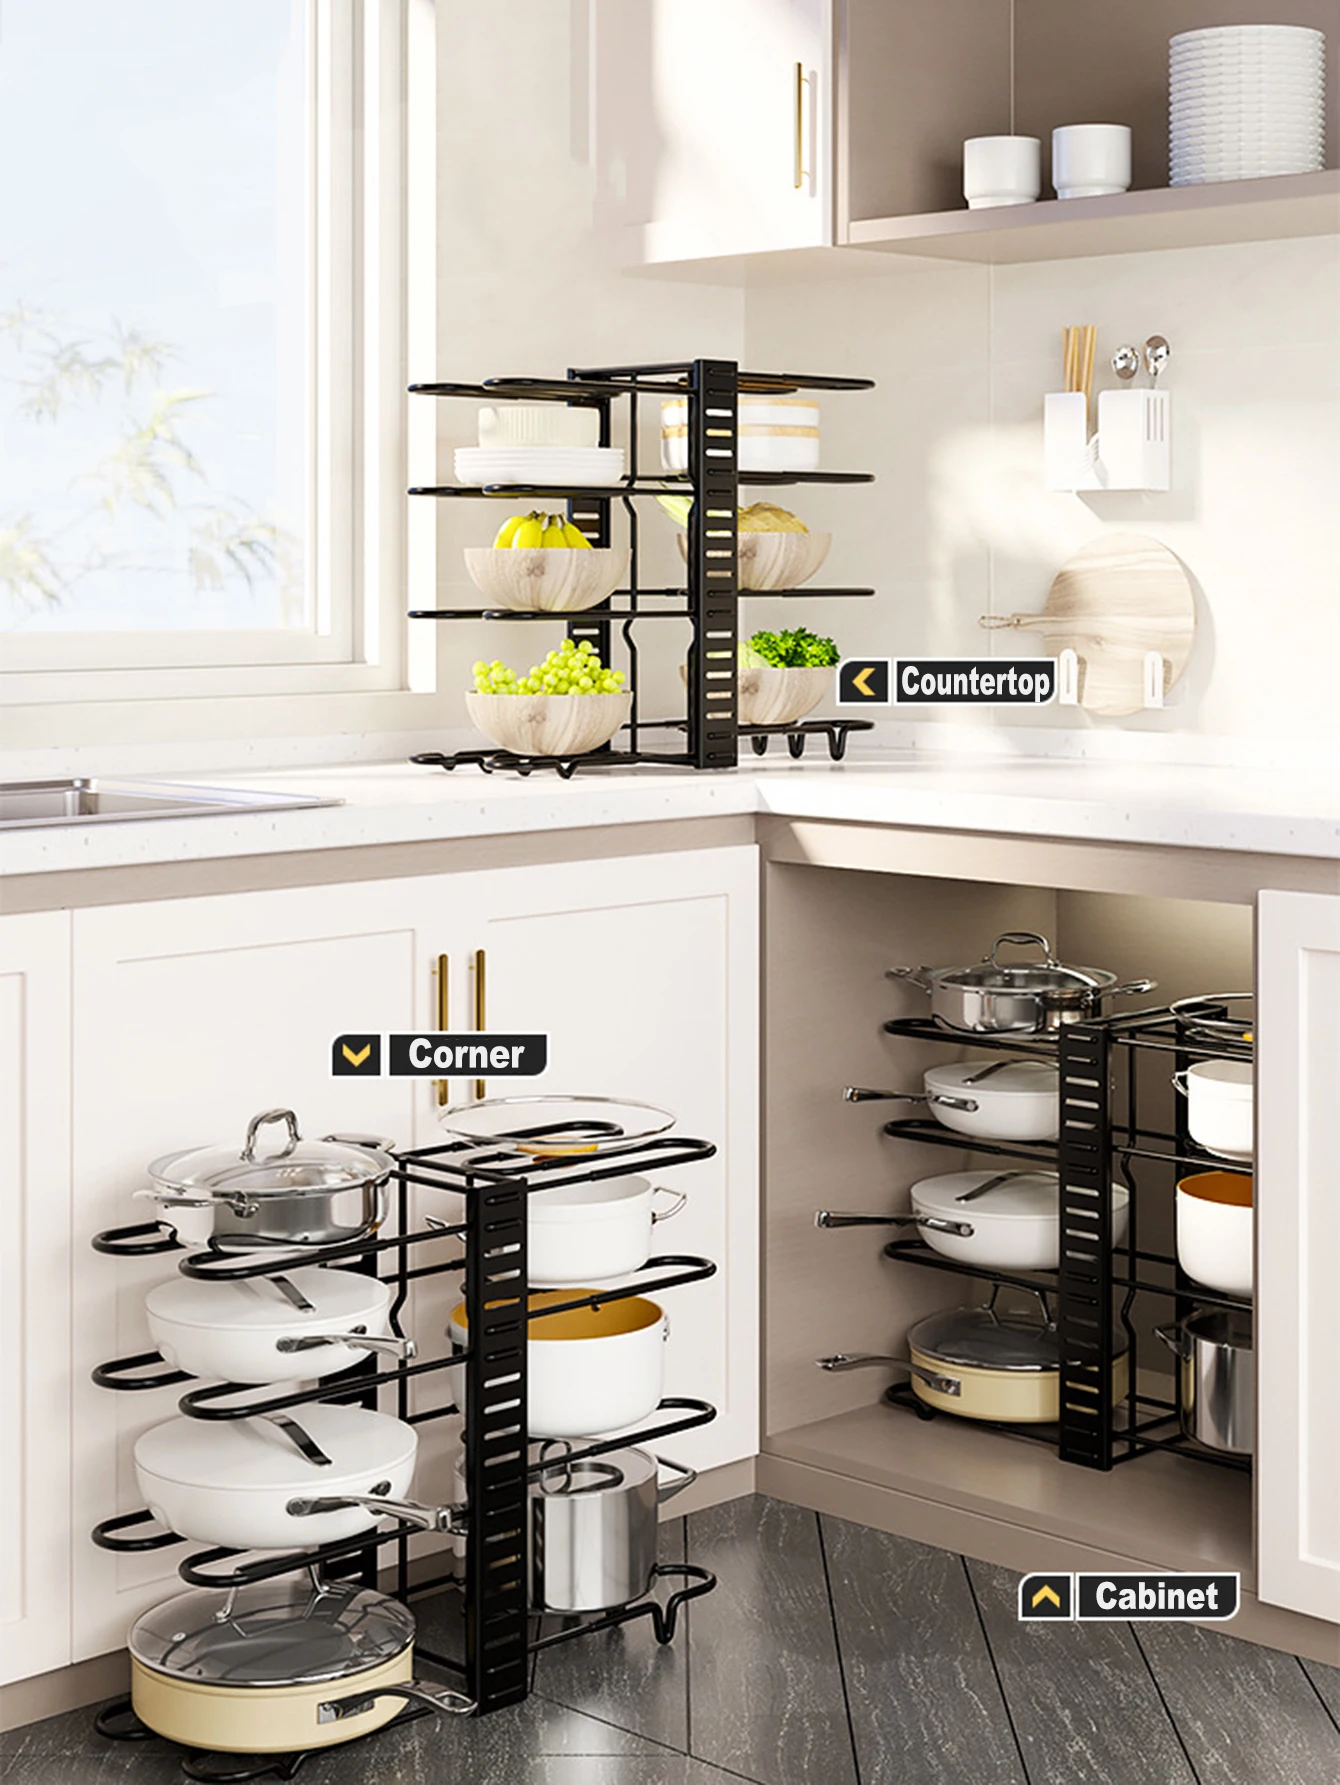 

Kitchen Shelf Organizer Multi-layer Pots Pans Rack Cabinet Bowl Storage Holder Countertop Household Accessories Kitchen Items